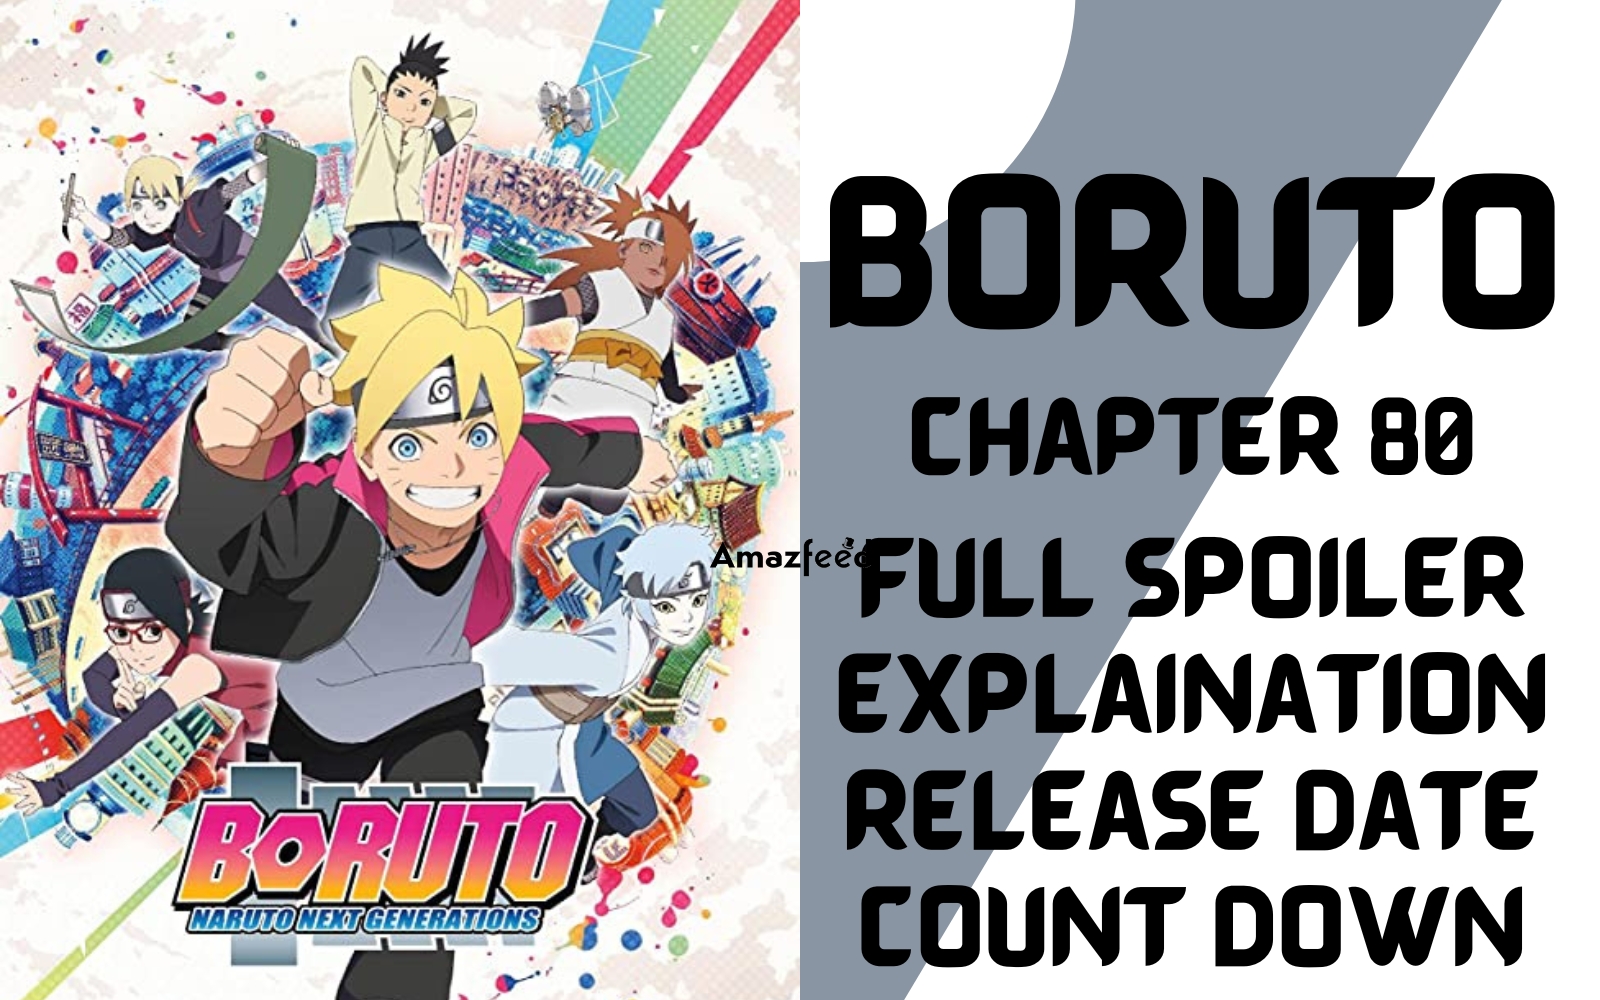 Spoiler alert! Boruto chapter 80 drops April 20 - Fan theories